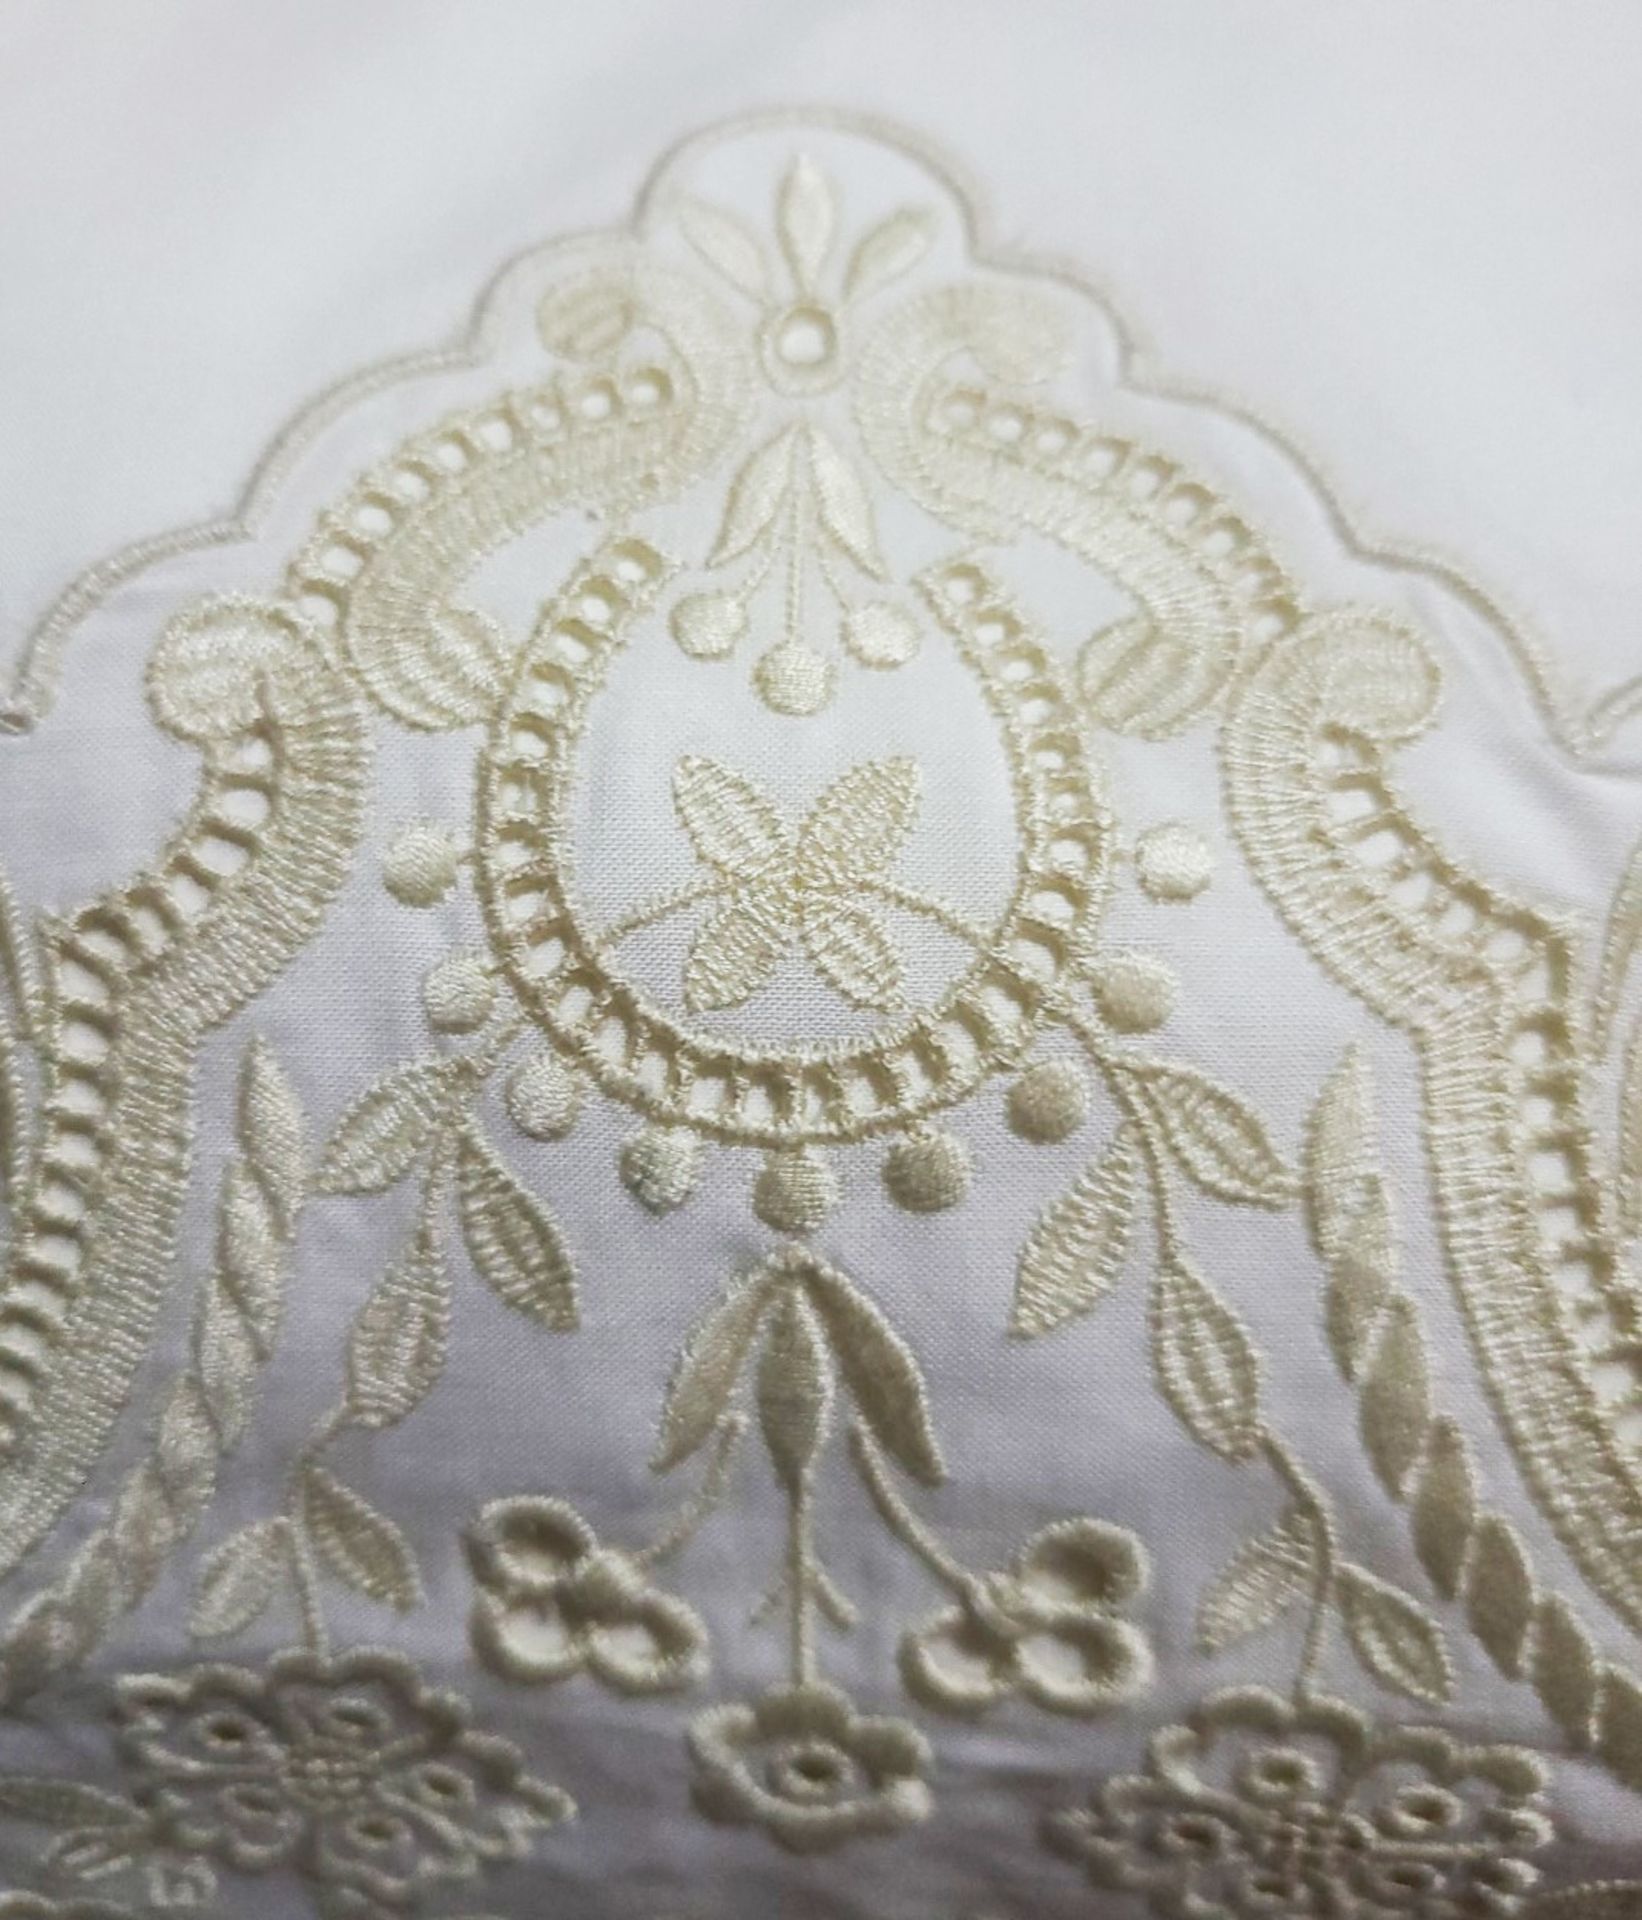 1 x PRATESI 'Fontana Di Trevi' Luxury Italian Biege Lace On Angel Skin Cotton Sham - RRP £1,100 - Image 3 of 4